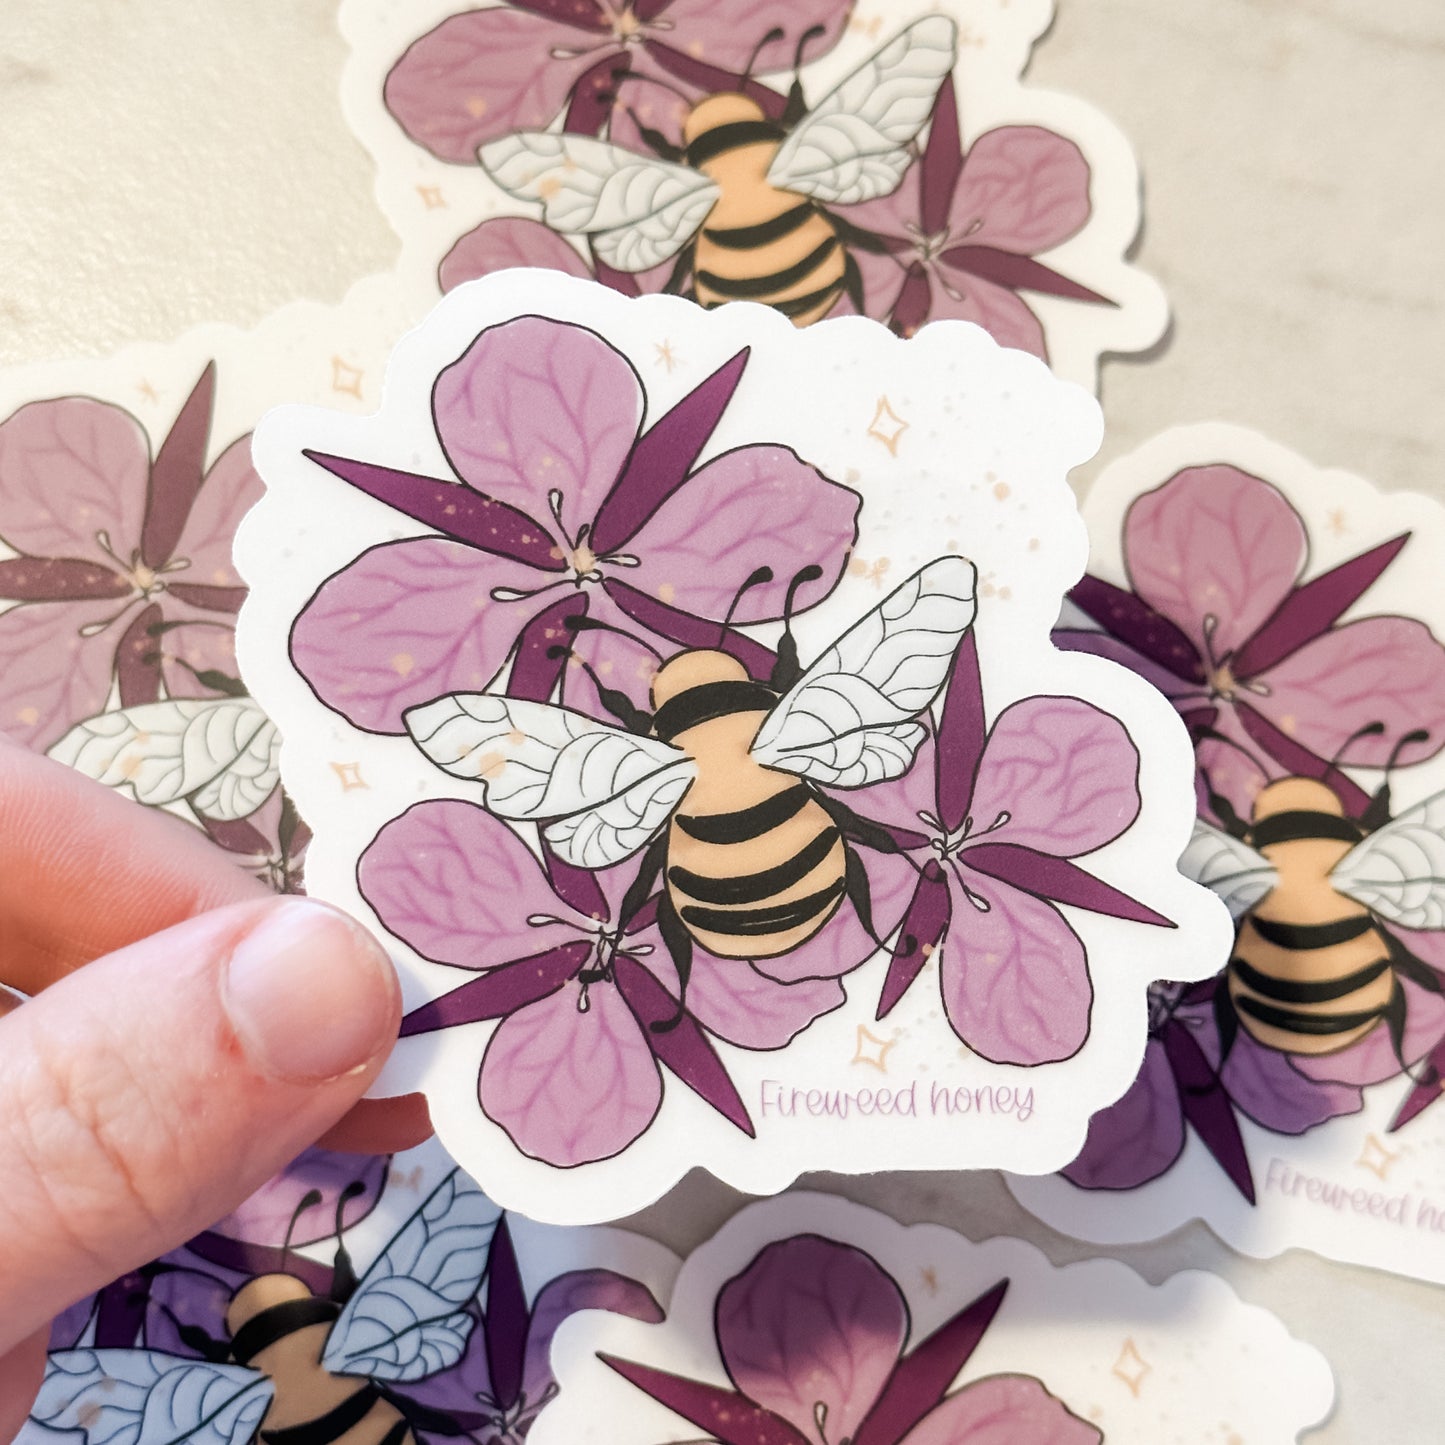 Fireweed Honey, Bee Sticker